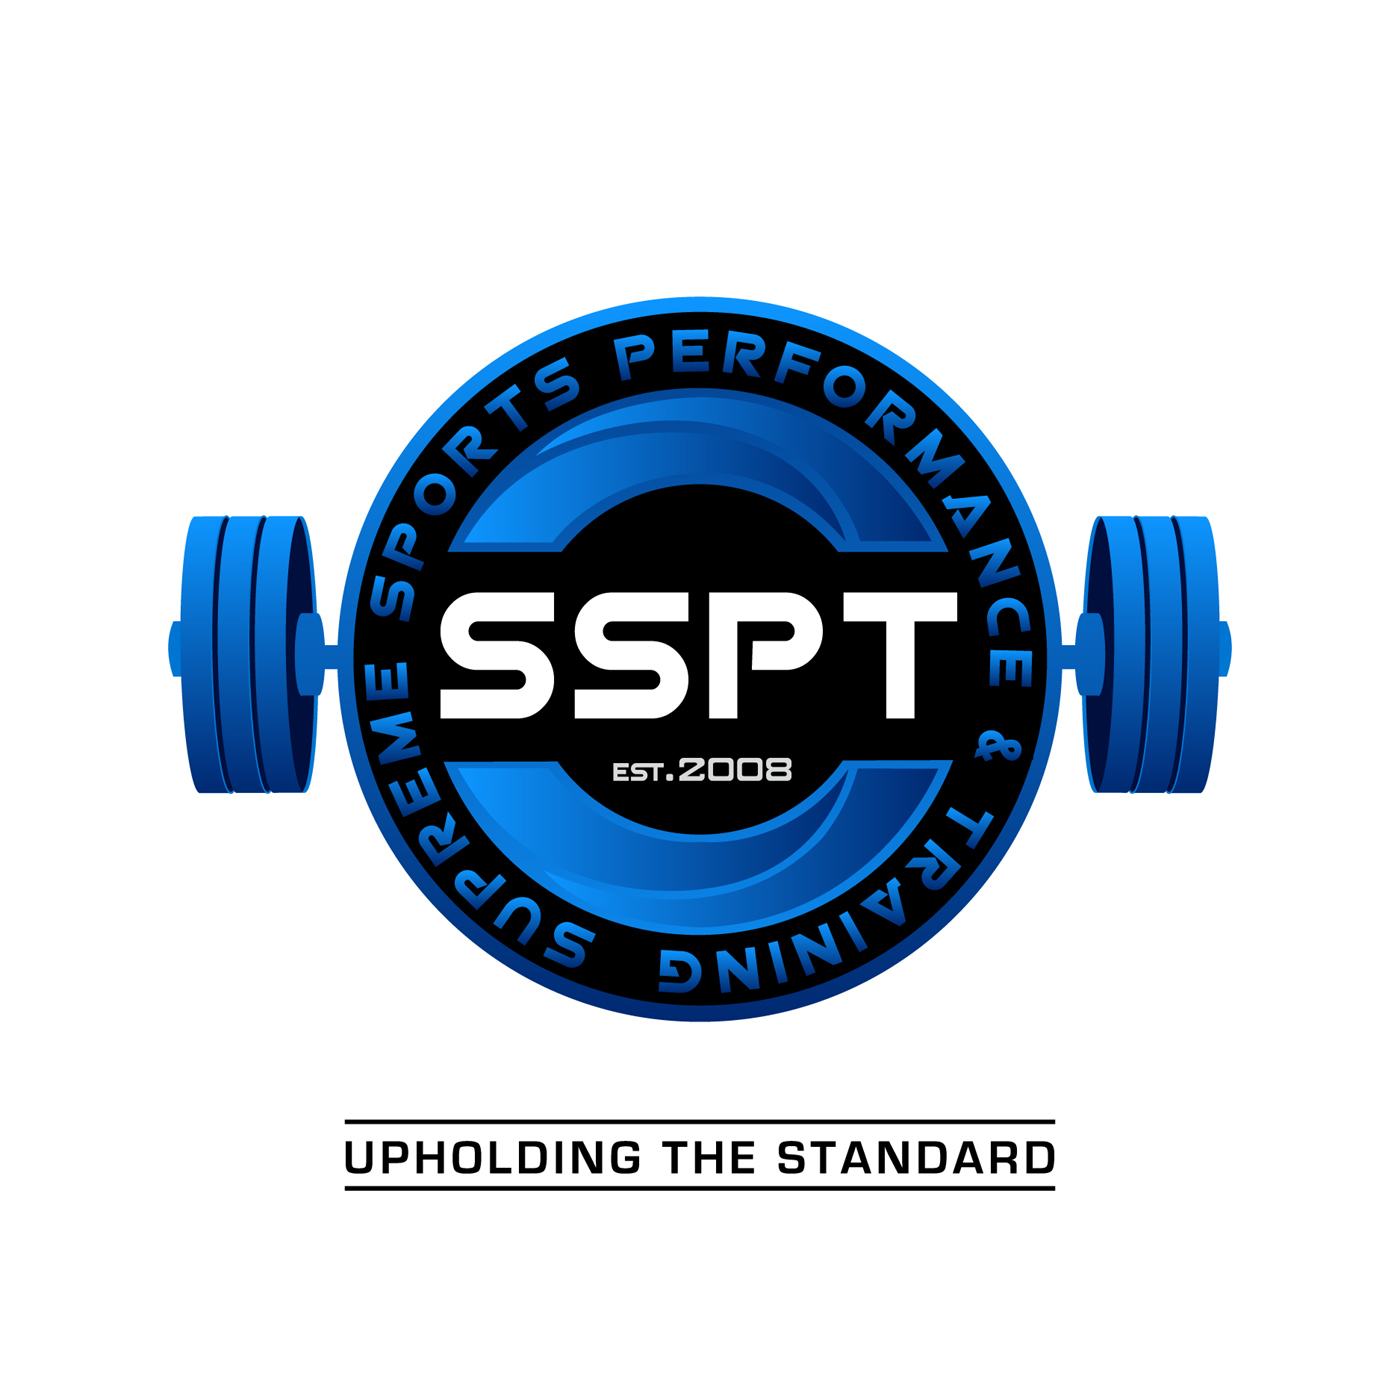 Upholding The Standard (SSPT)